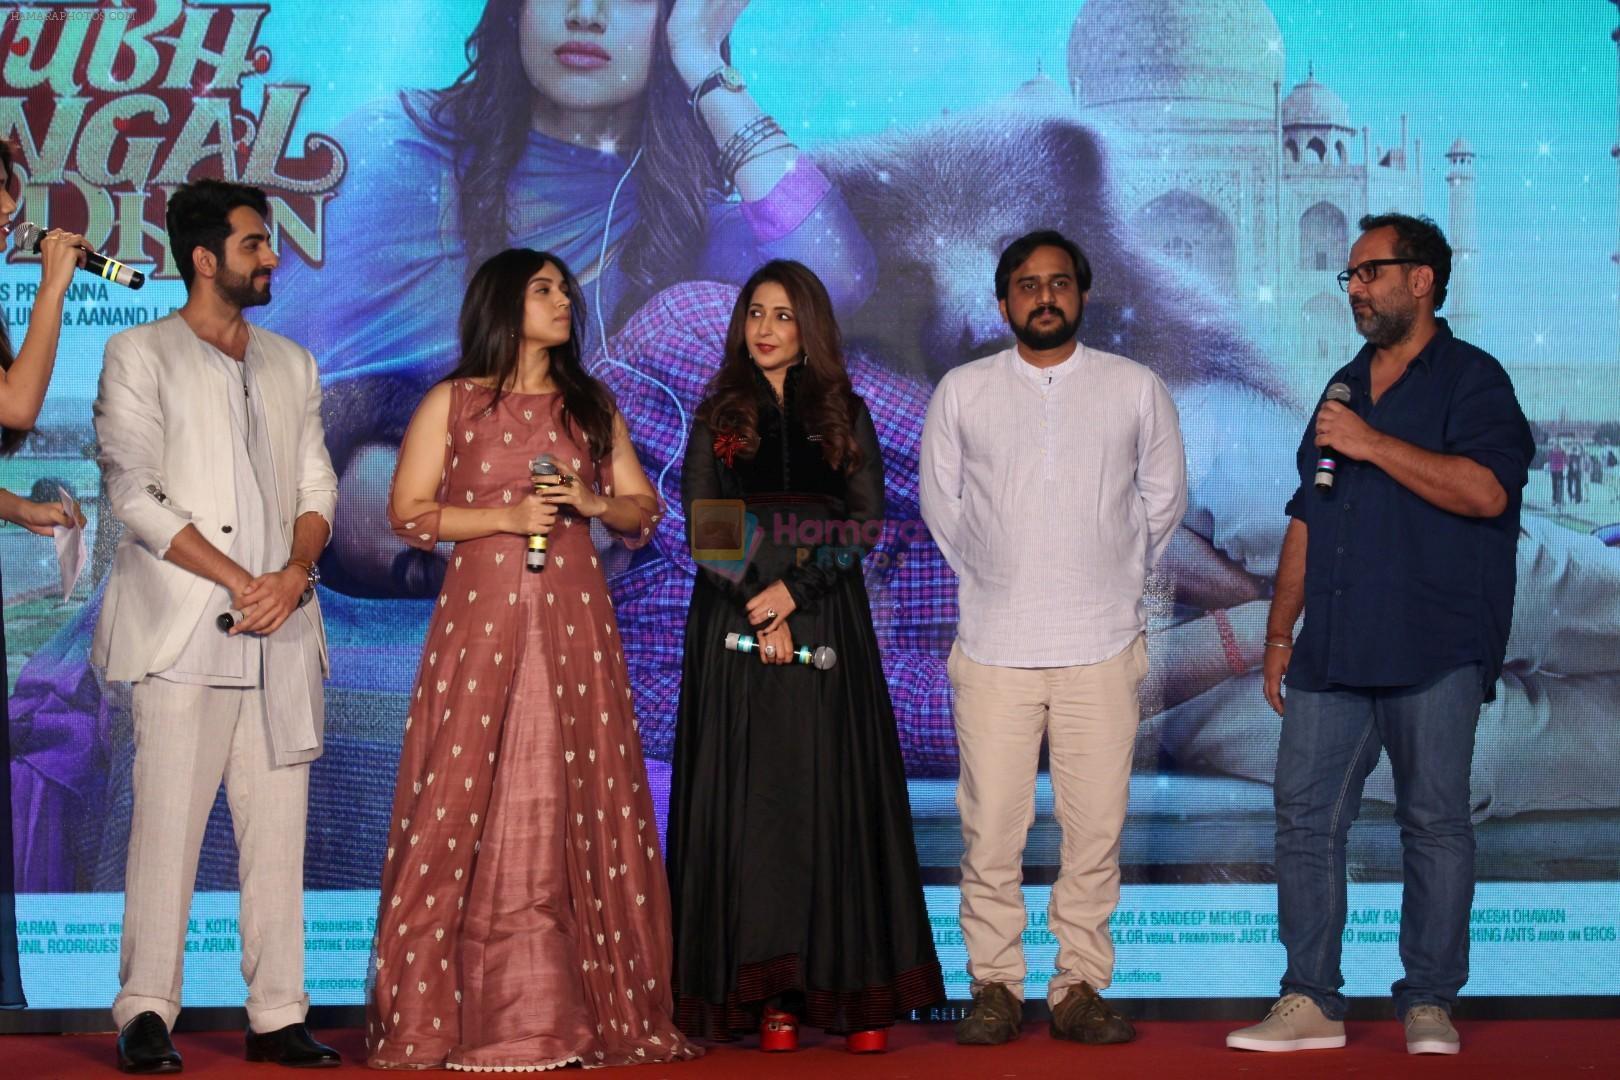 Ayushmann Khurrana, Bhumi Pednekar, Aanand L Rai, Krishika Lulla, Rs Prasanna at the Trailer Launch Of Movie Shubh Mangal Savdhan on 1st Aug 2017